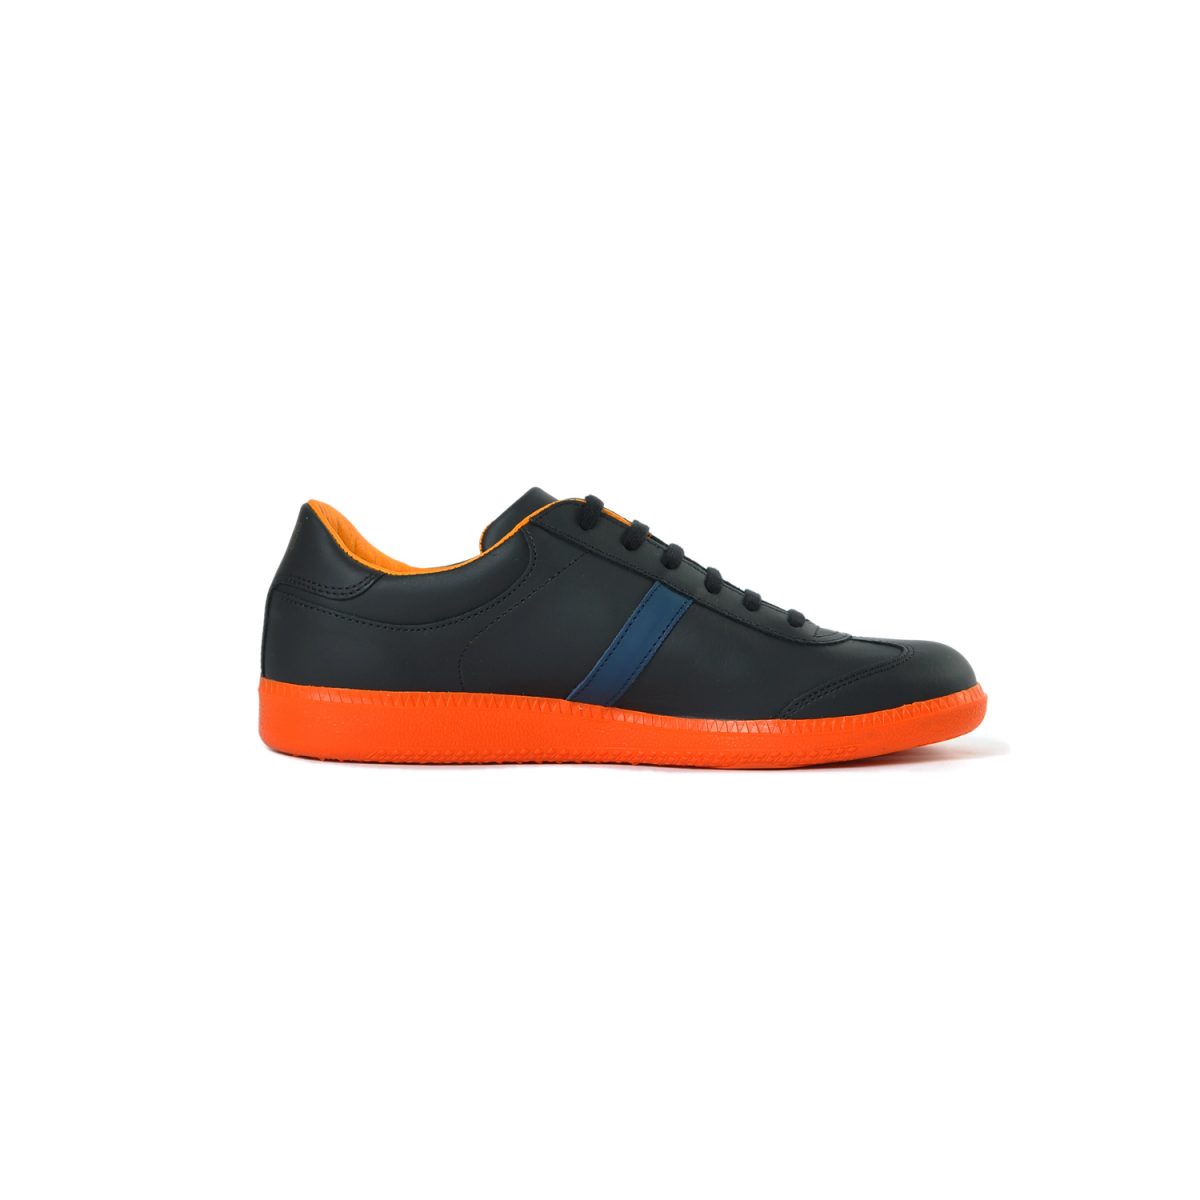 Tisza shoes - Compakt - Black-mix-orange